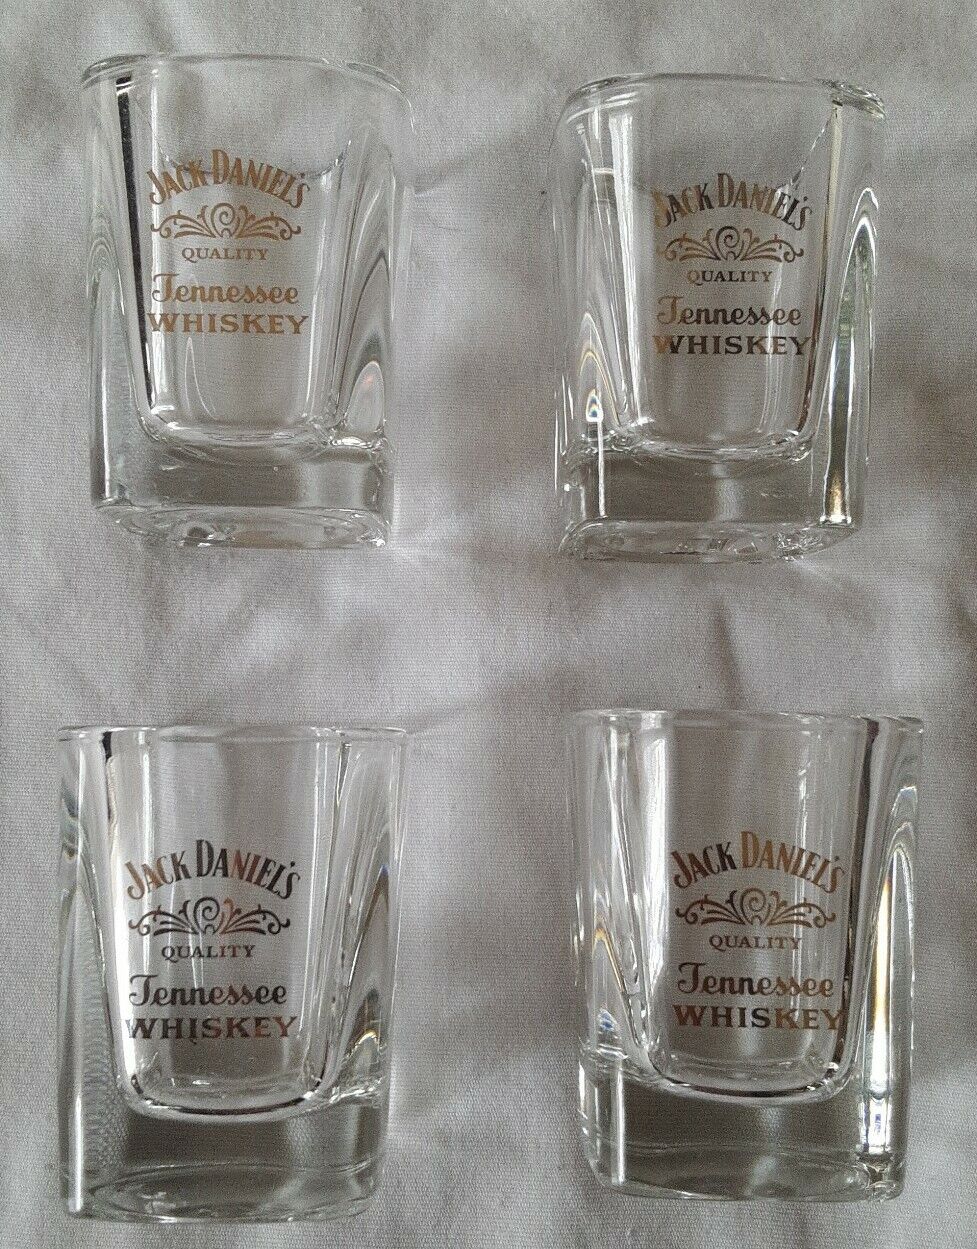 SET OF 4 JACK DANIELS TENNESSEE WHISKEY SHOT GLASSES